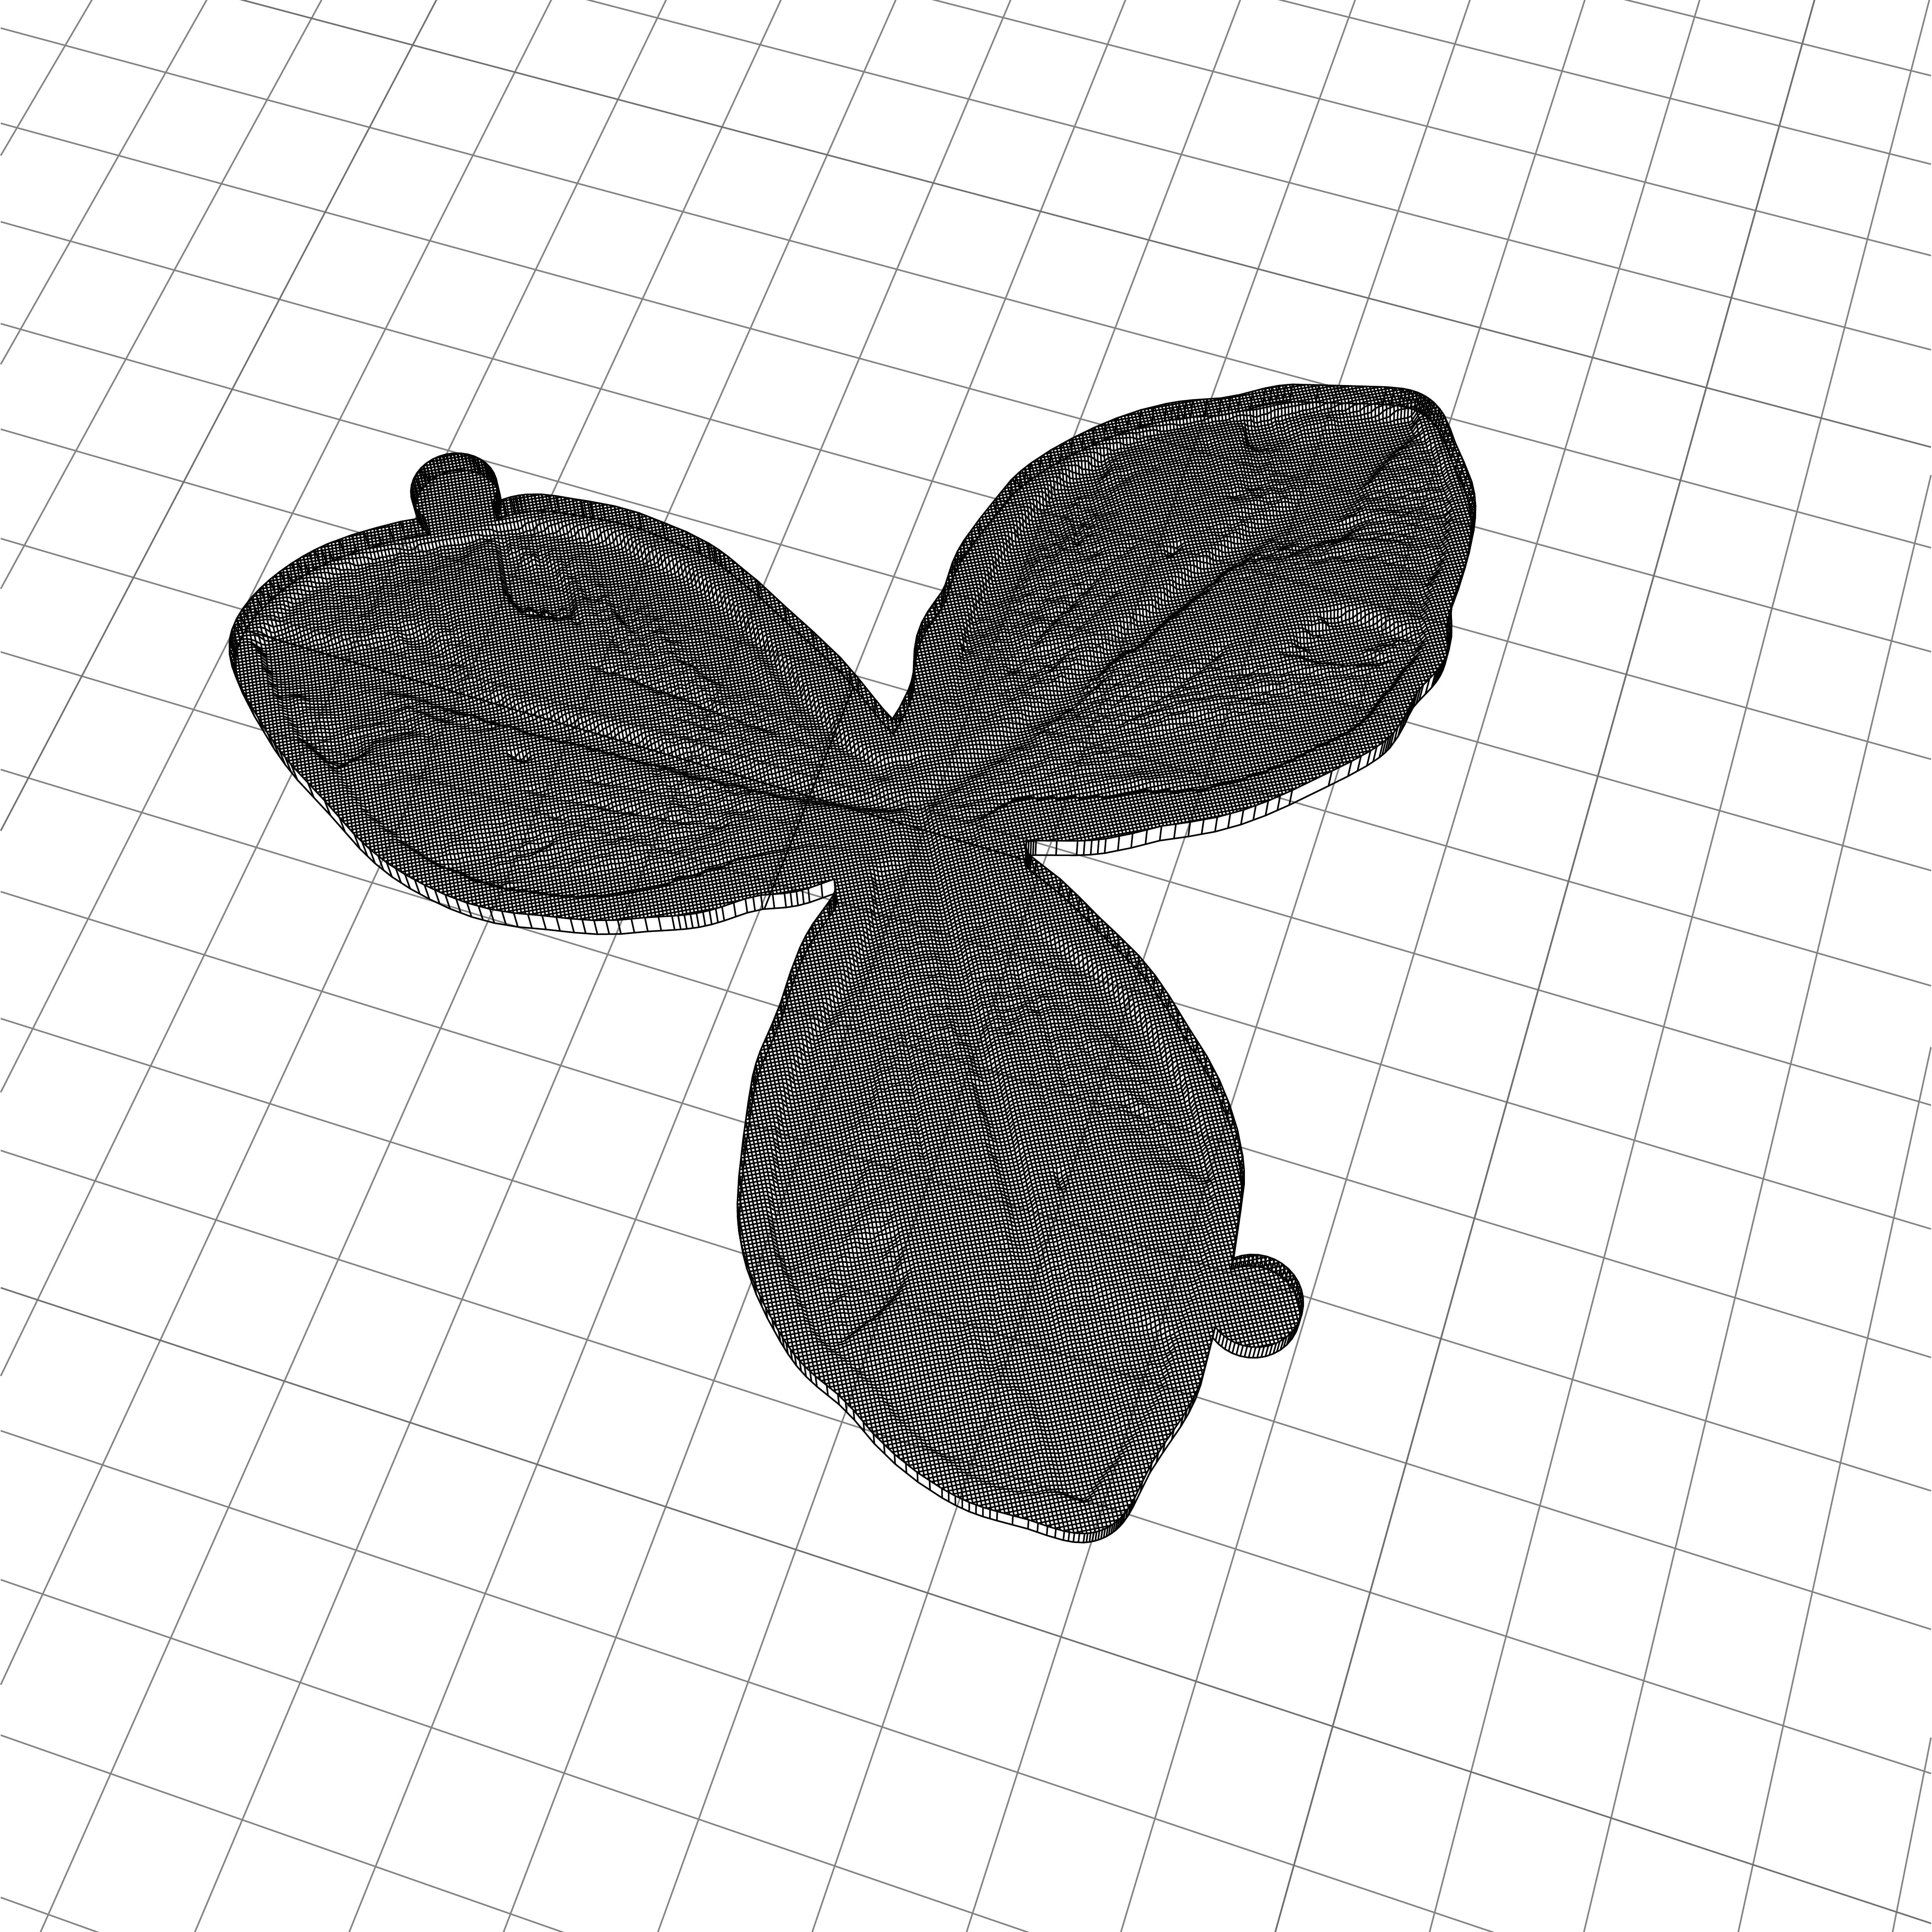 Digital rendering of a flower-shaped bold